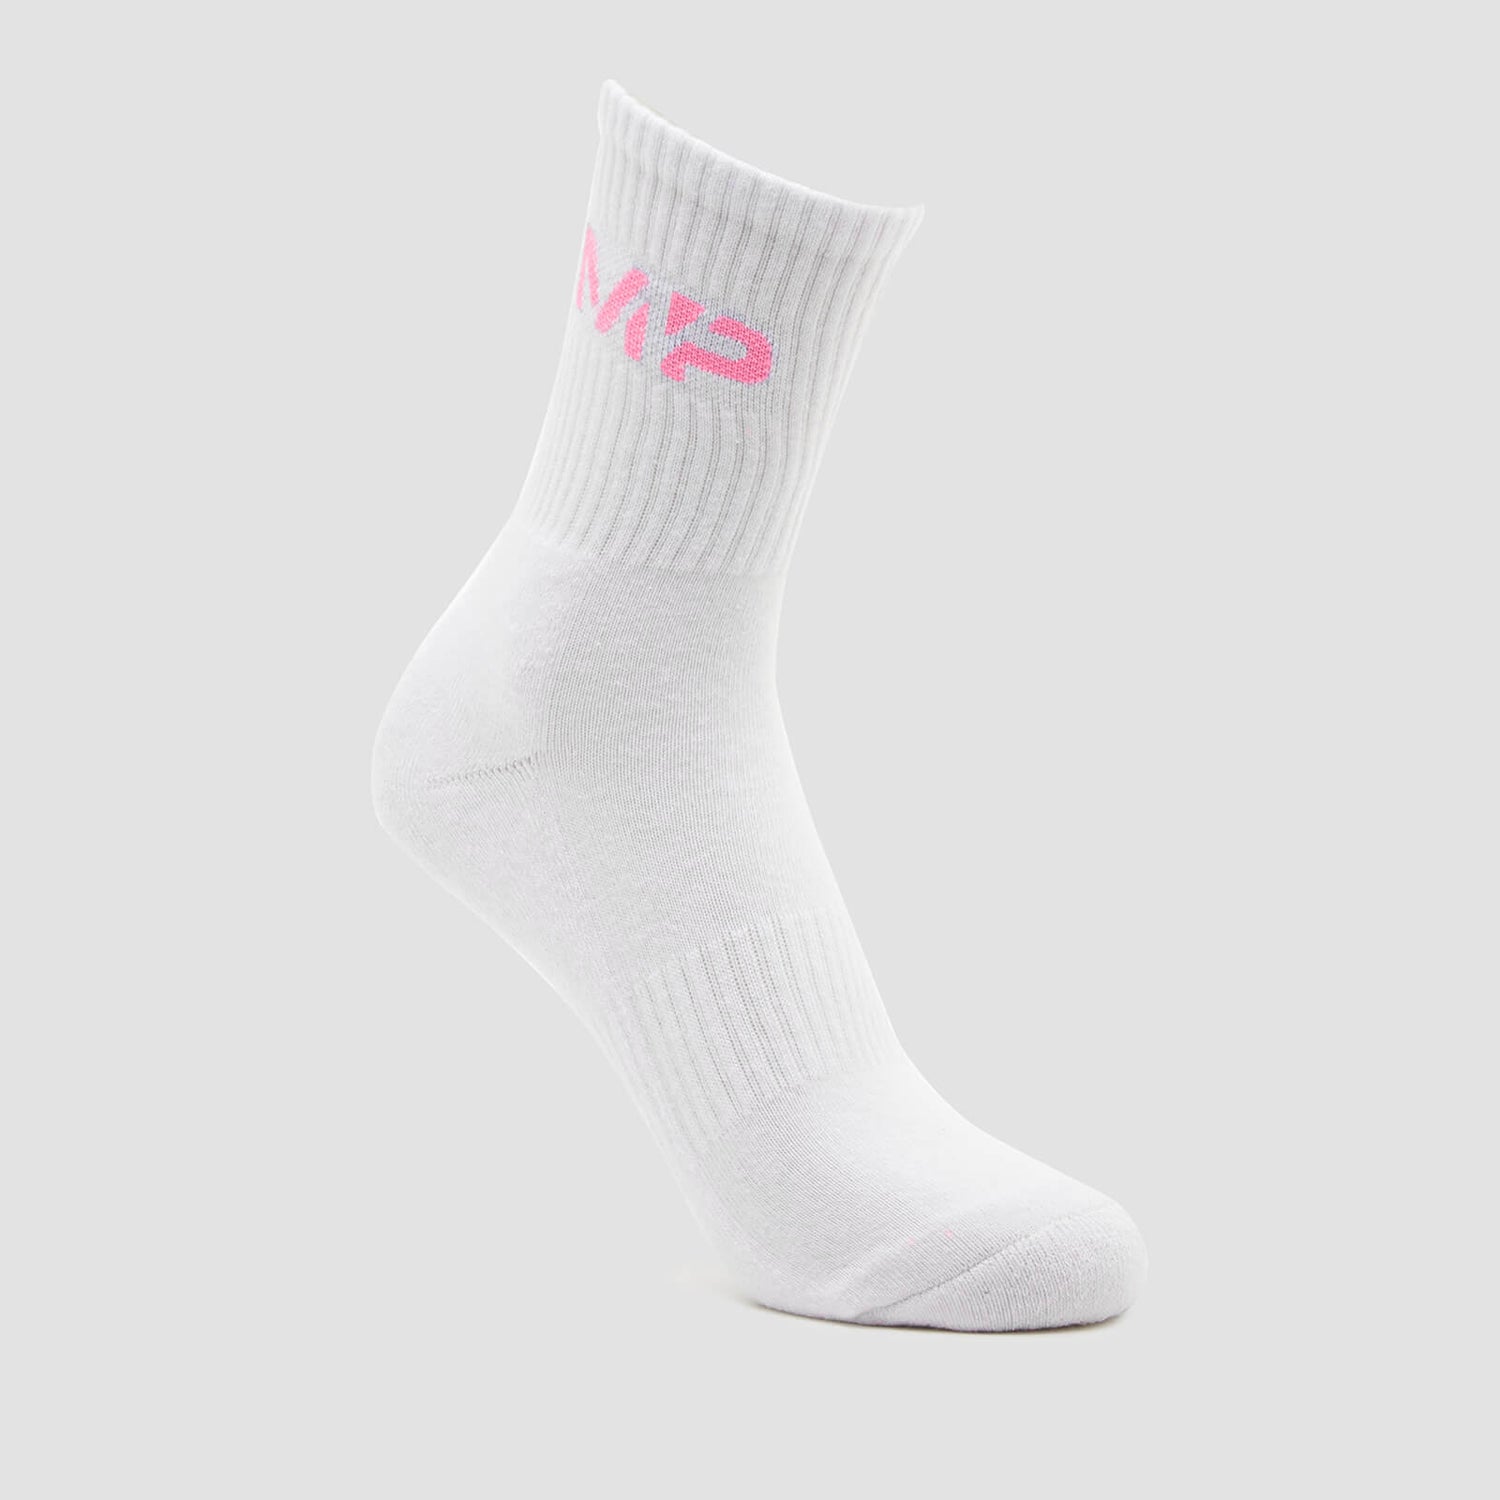 MP Essential Crew Socks Unisex - White/Candy Floss - UK 6-8